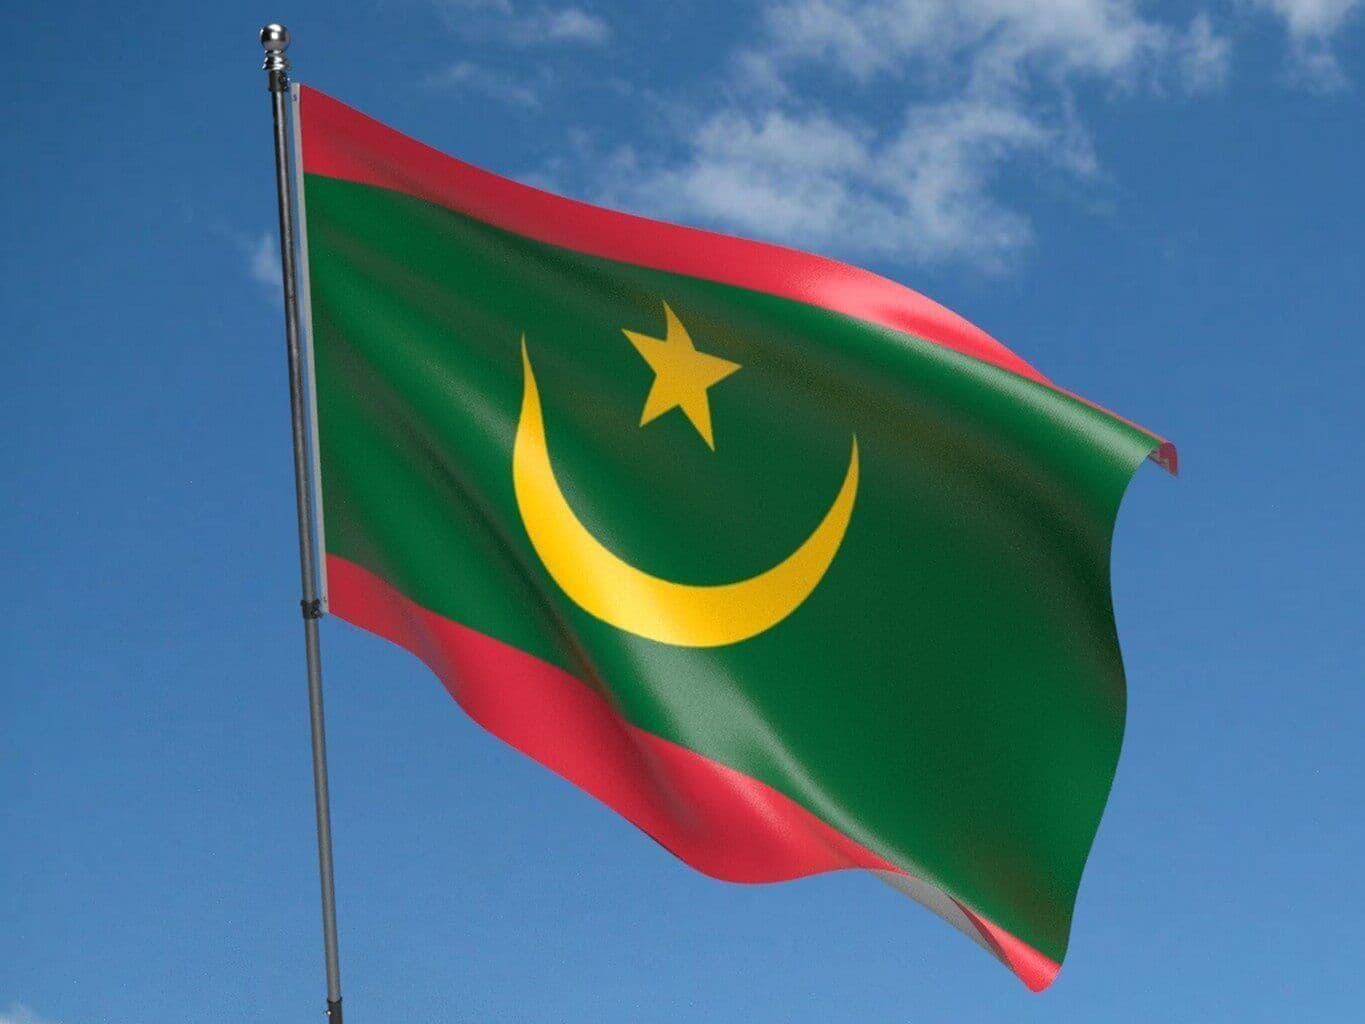 How to get Vietnam visa from Mauritania?